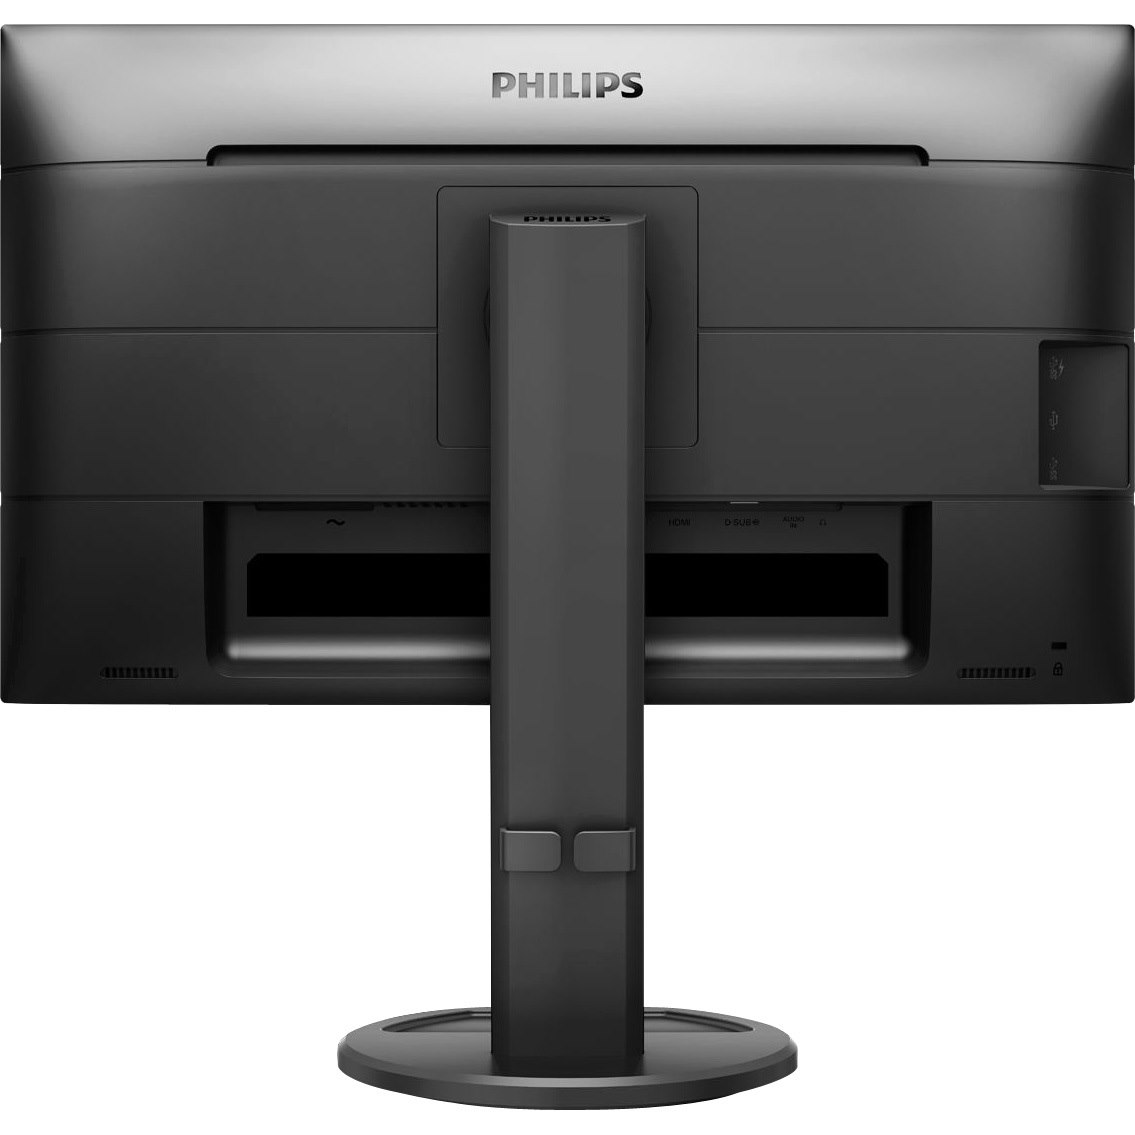 Philips 241B8QJEB 24" Class Full HD Gaming LCD Monitor - 16:9 - Textured Black